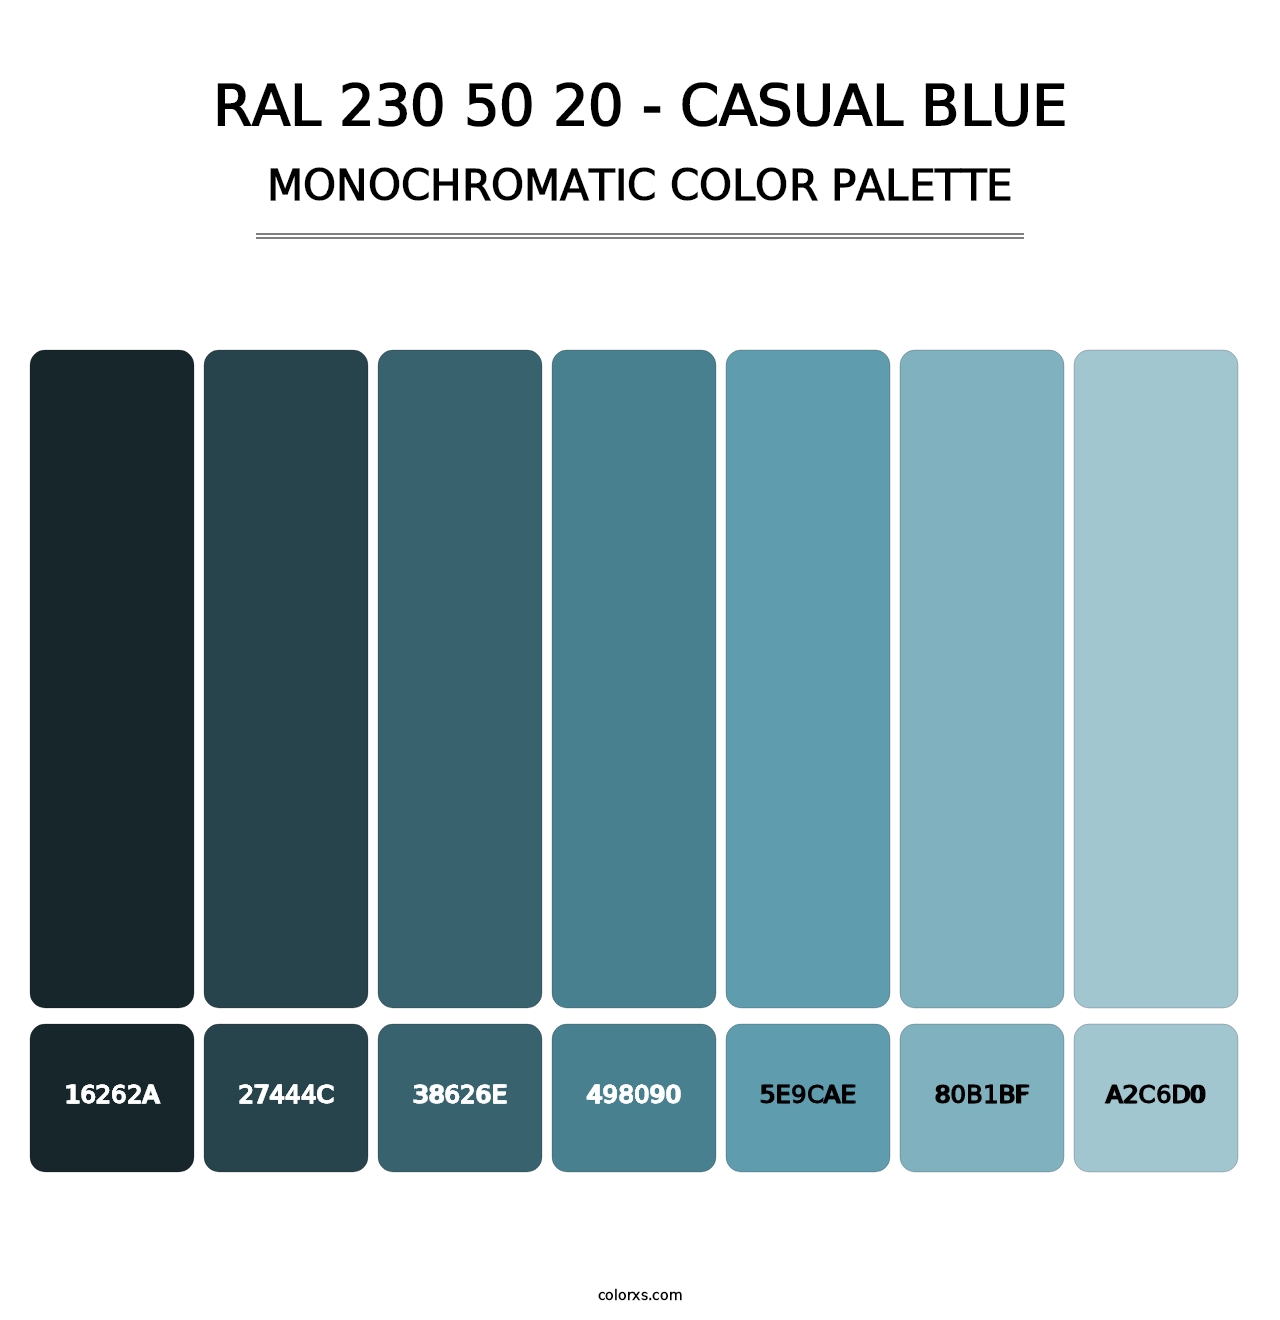 RAL 230 50 20 - Casual Blue - Monochromatic Color Palette